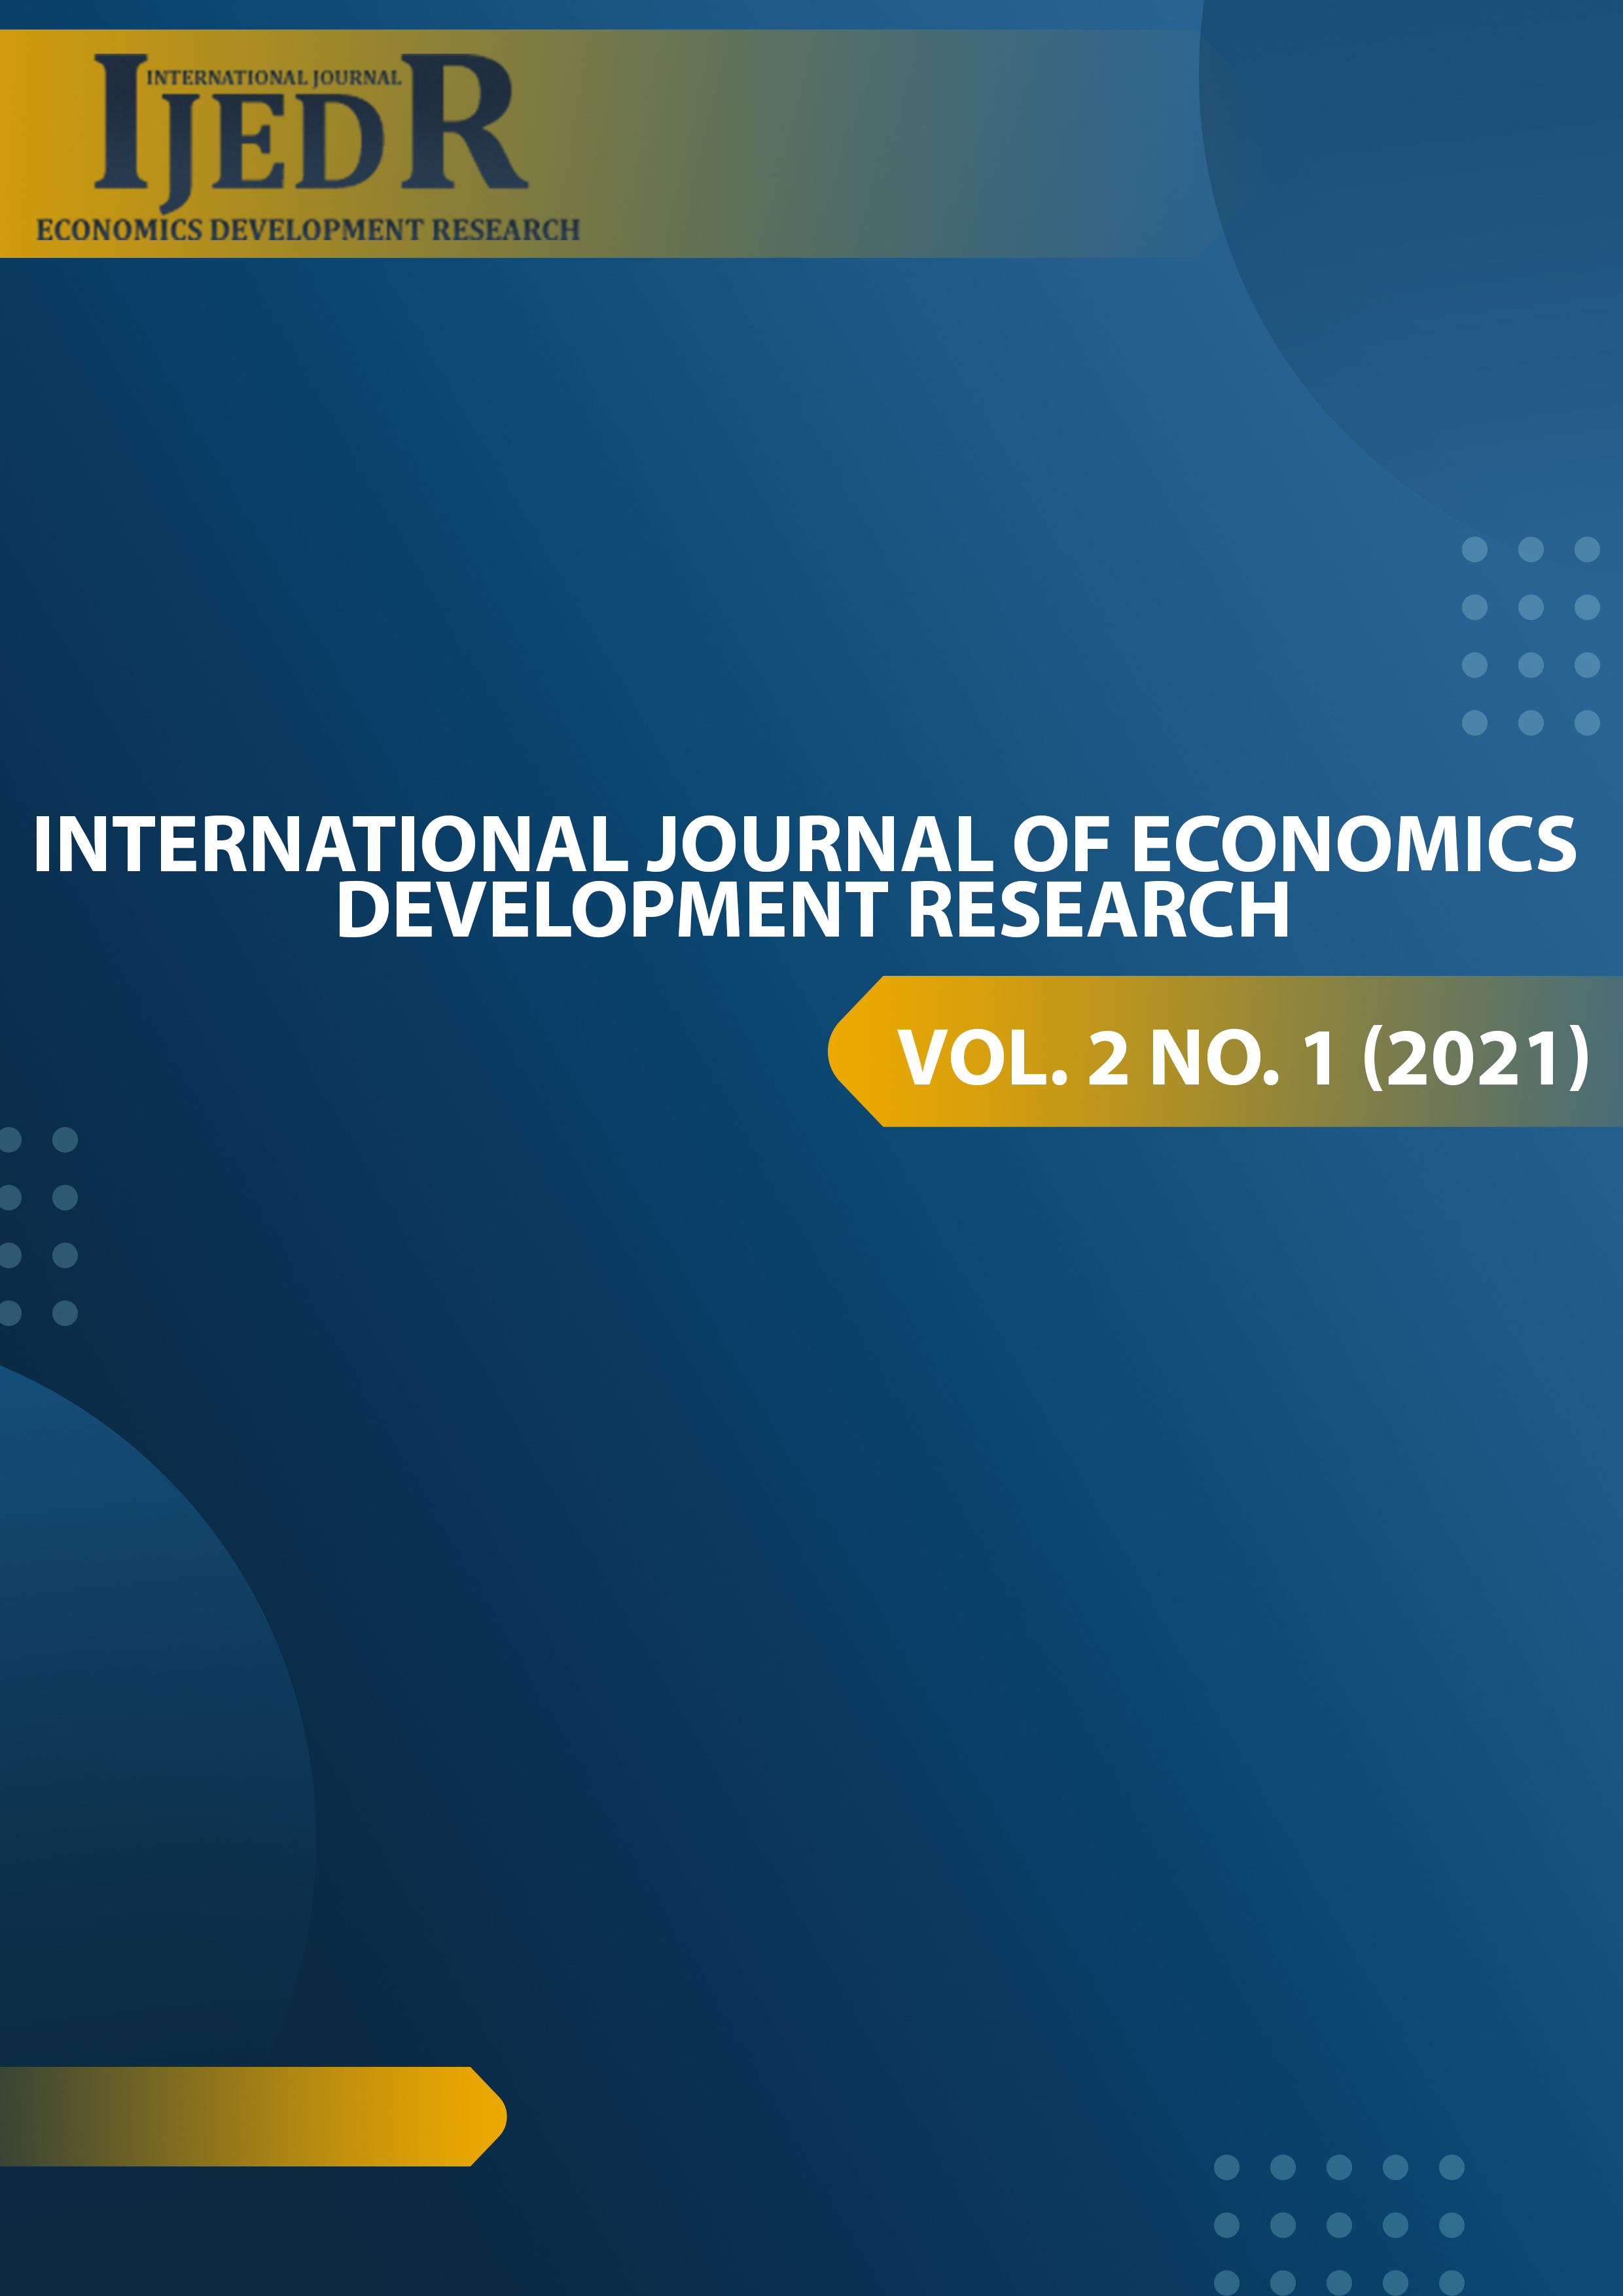 					View Vol. 2 No. 1 (2021): International Journal of Economics Development Research
				